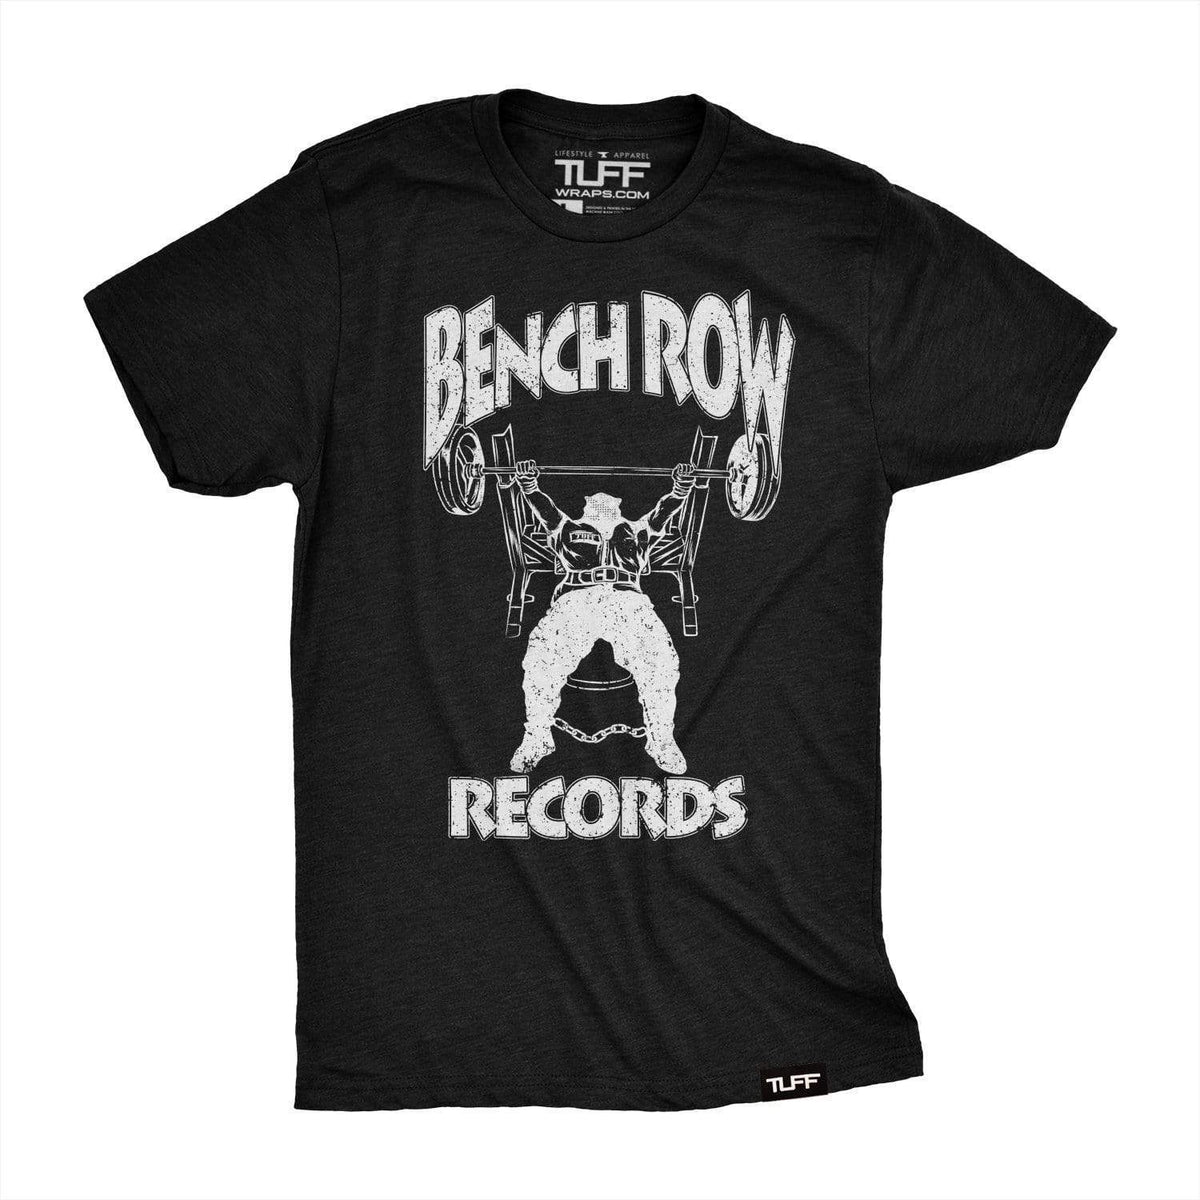 Bench Row Records Tee S / Black with White TuffWraps.com